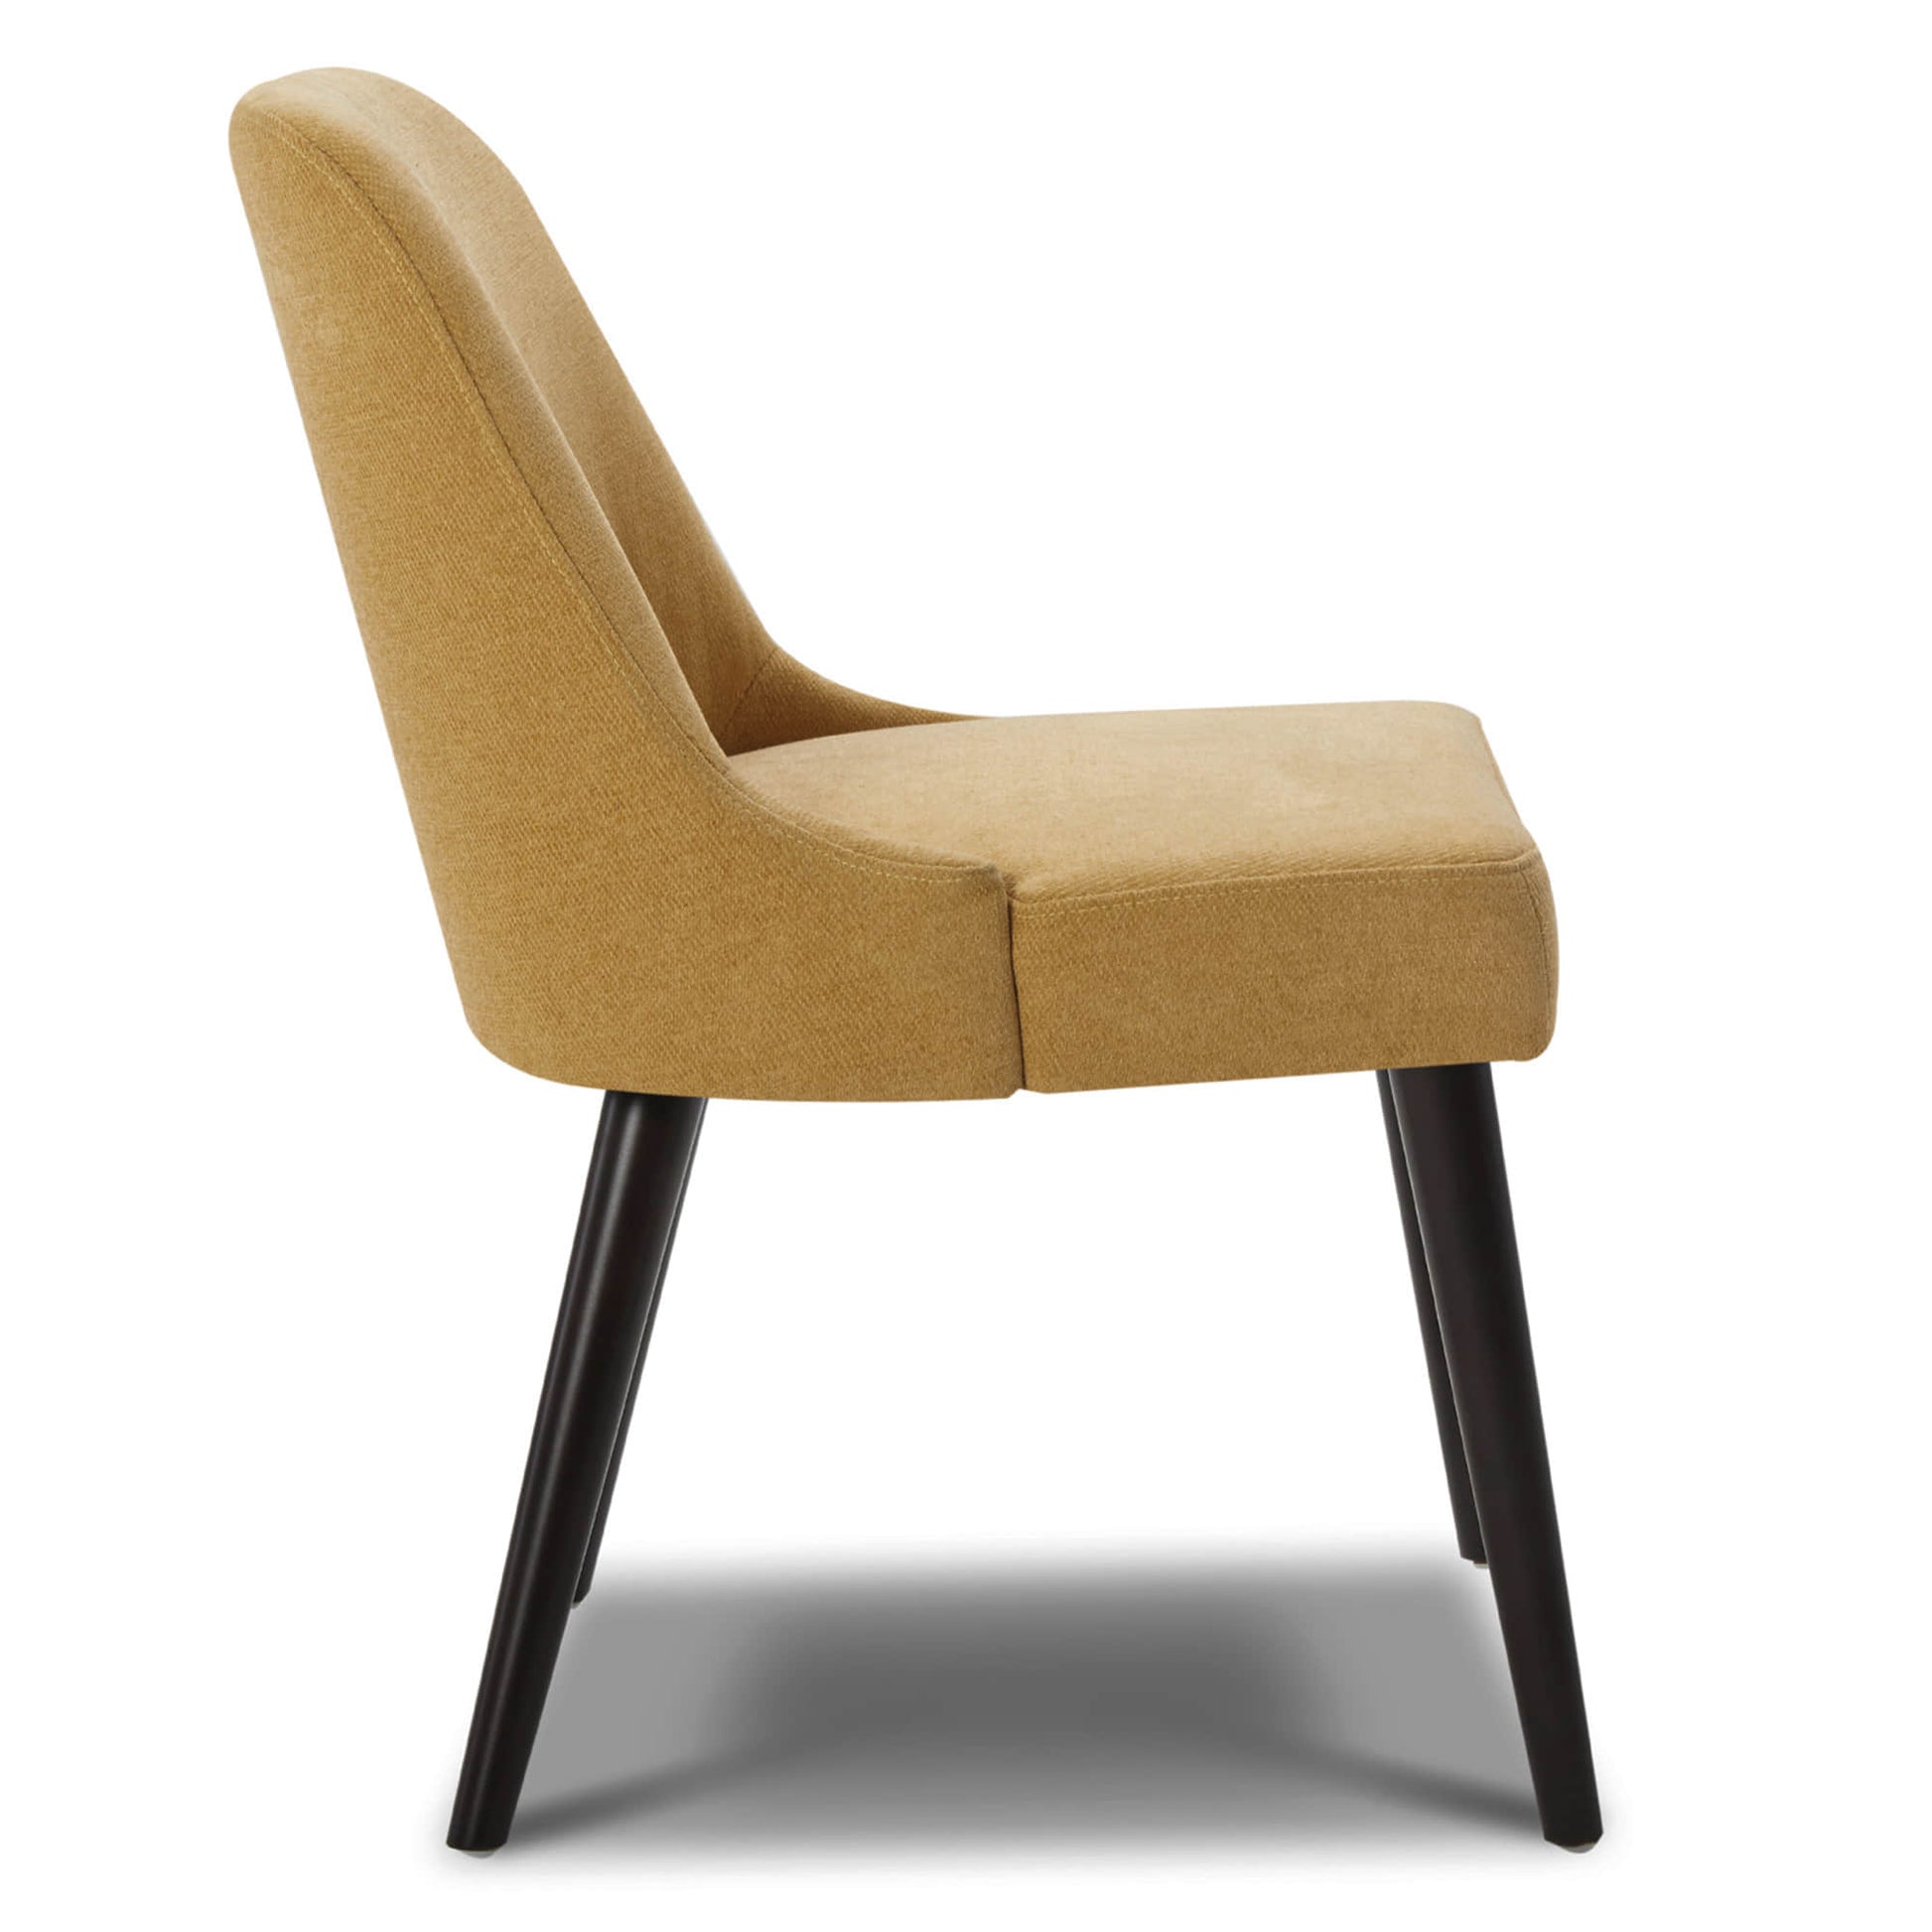 CHITA LIVING-Rhett Dining Chair (Set of 2)-Dining Chairs-Fabric-Canary Yellow-